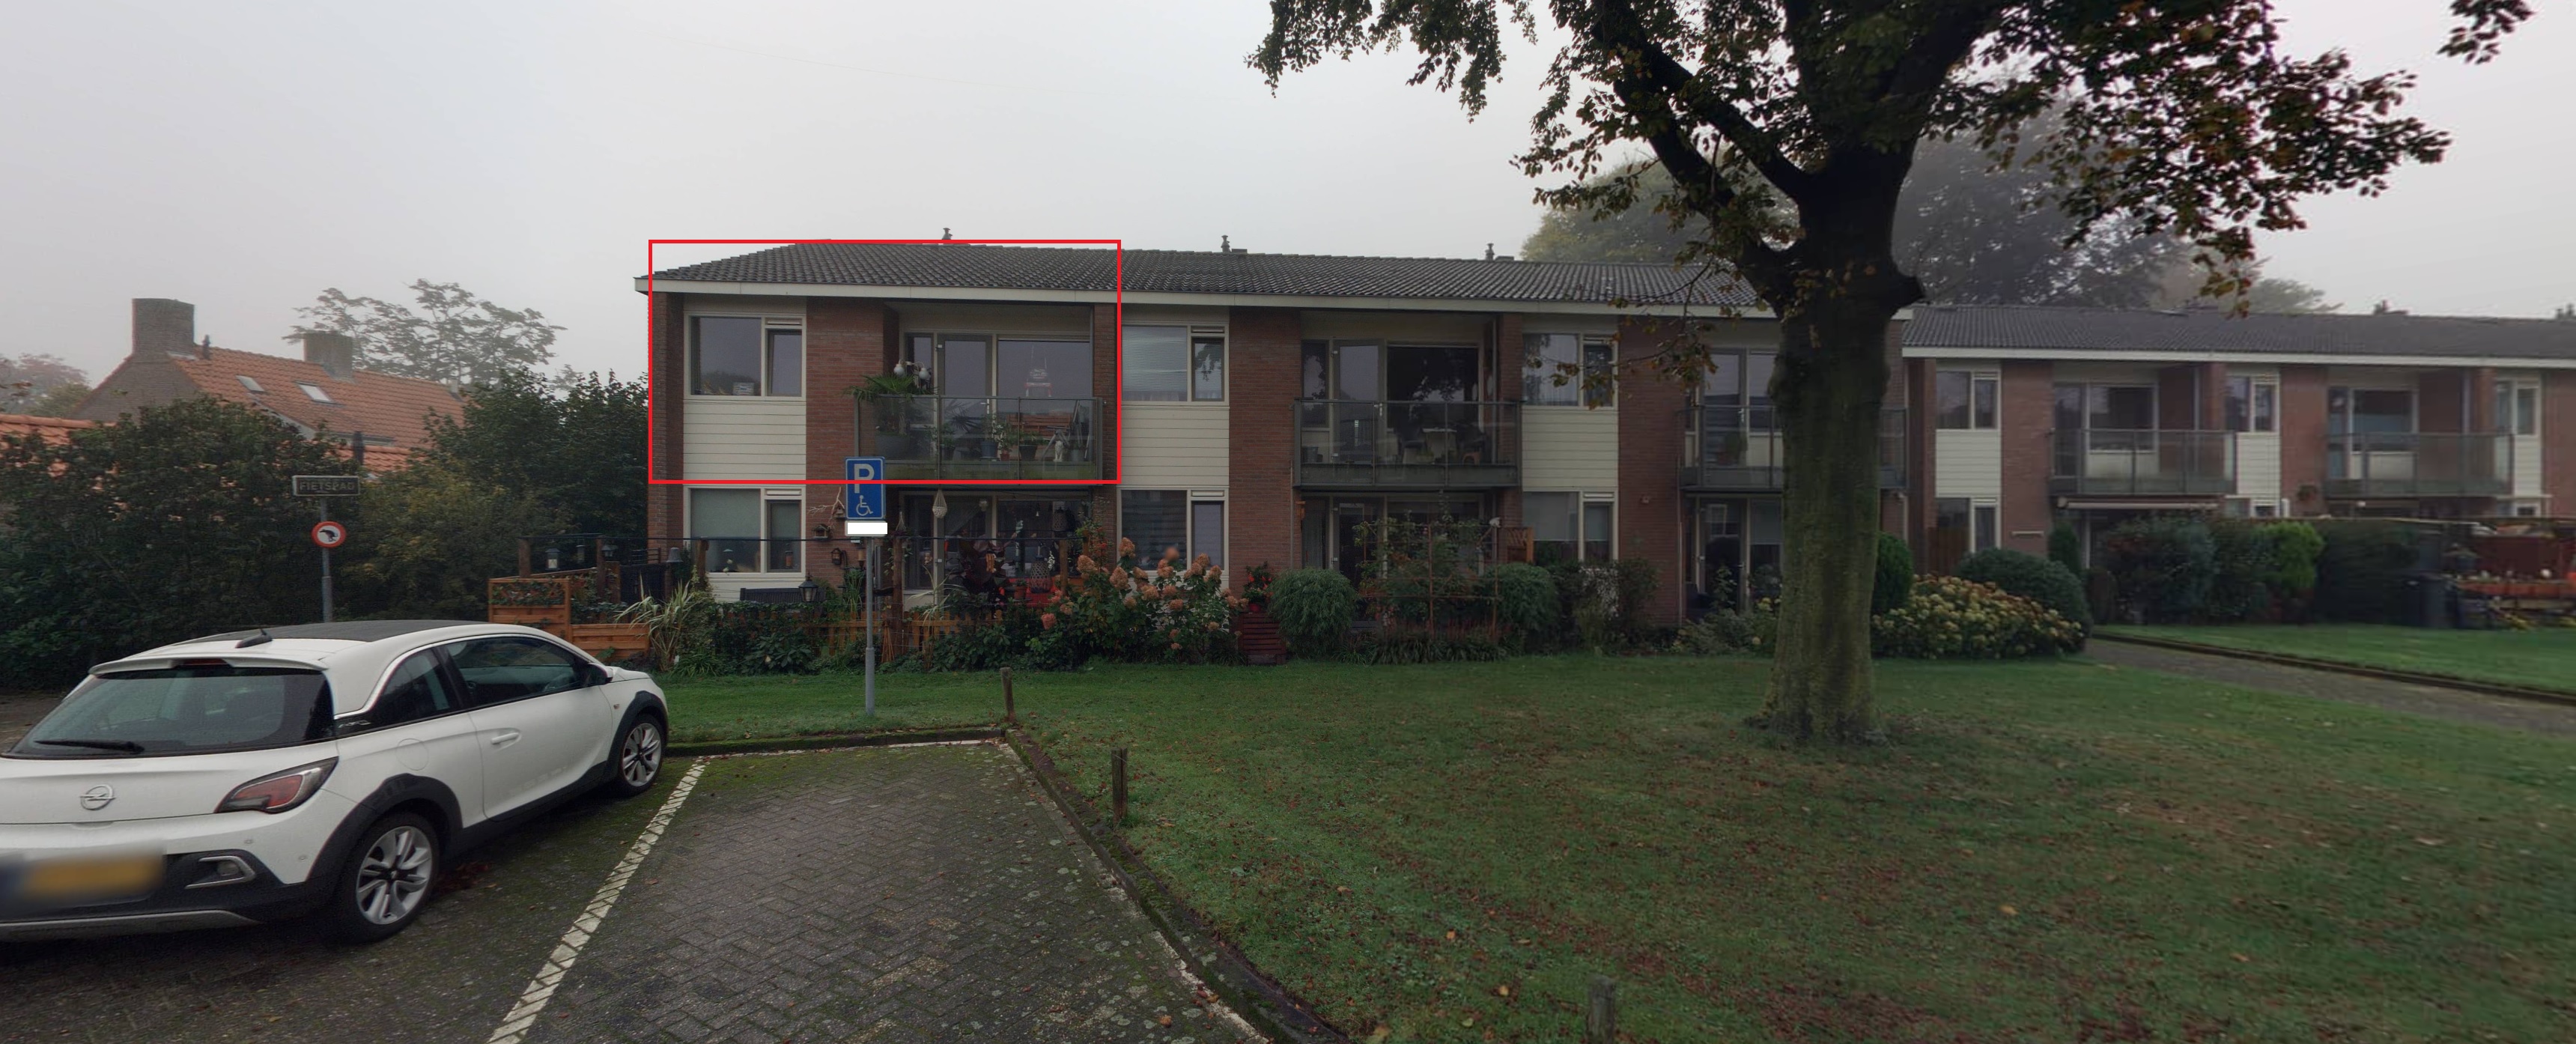 Agnes van Kleefstraat 20, 5688 AT Oirschot, Nederland